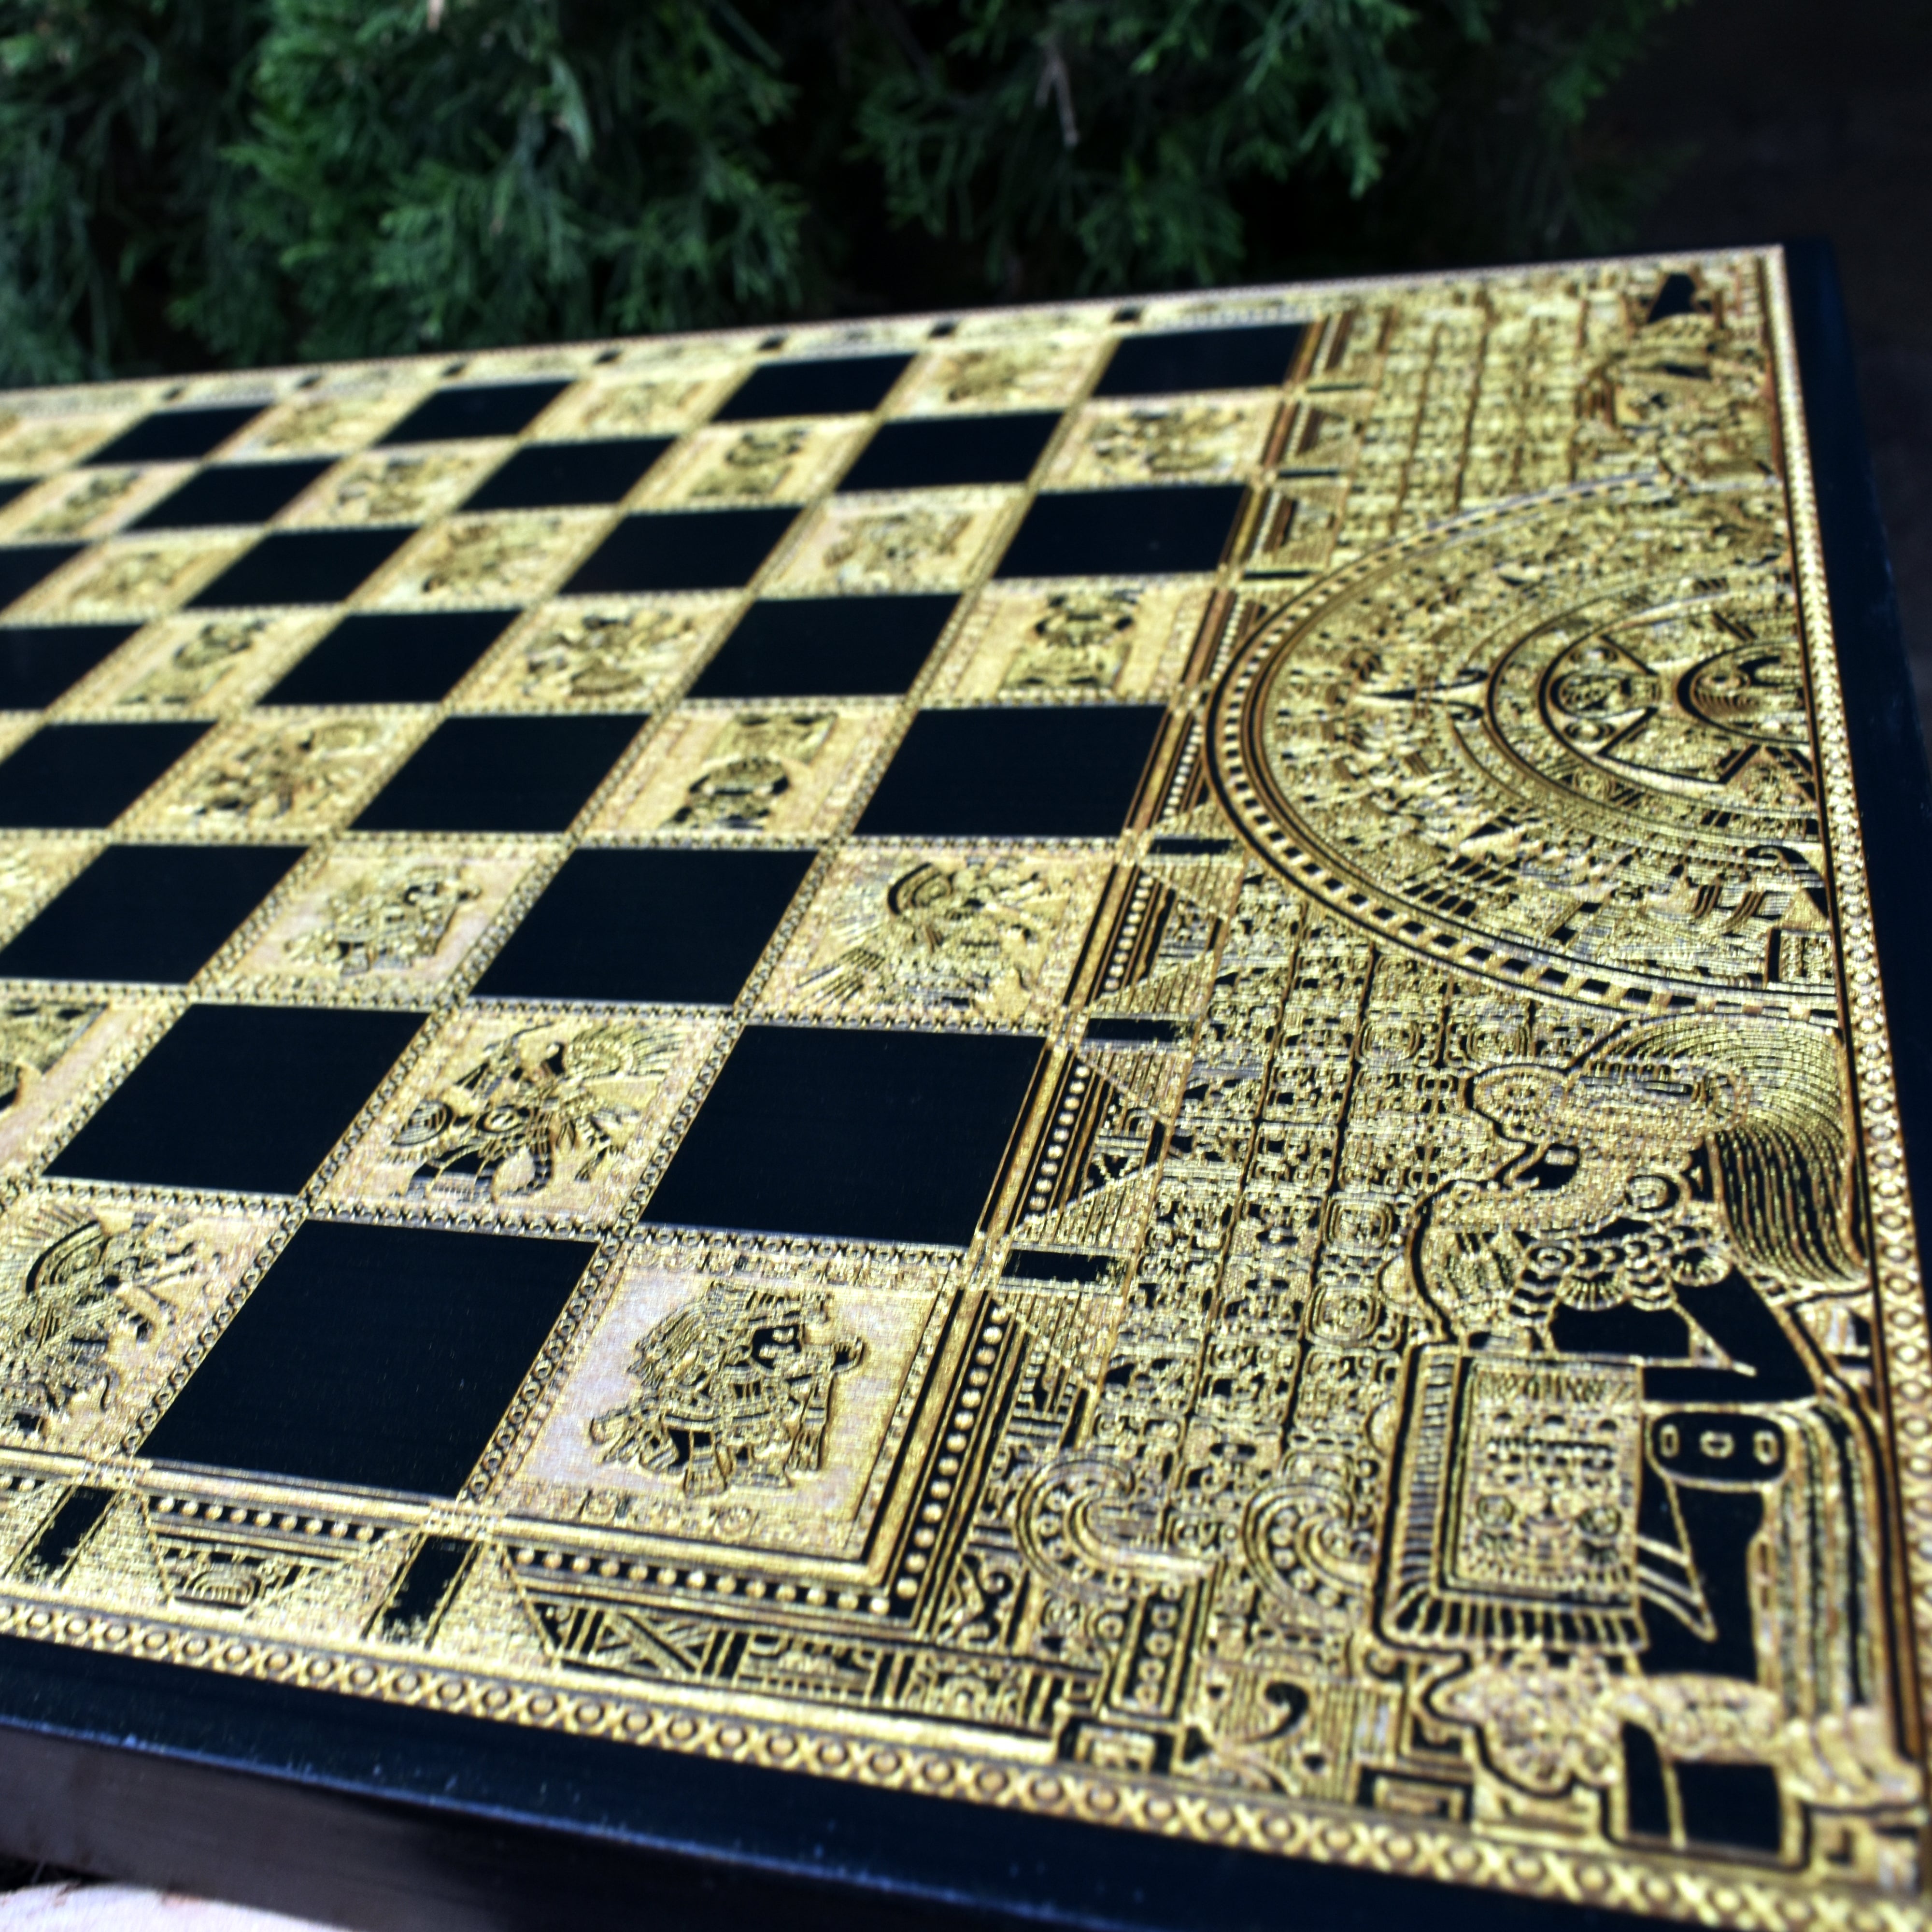 chess board handmade